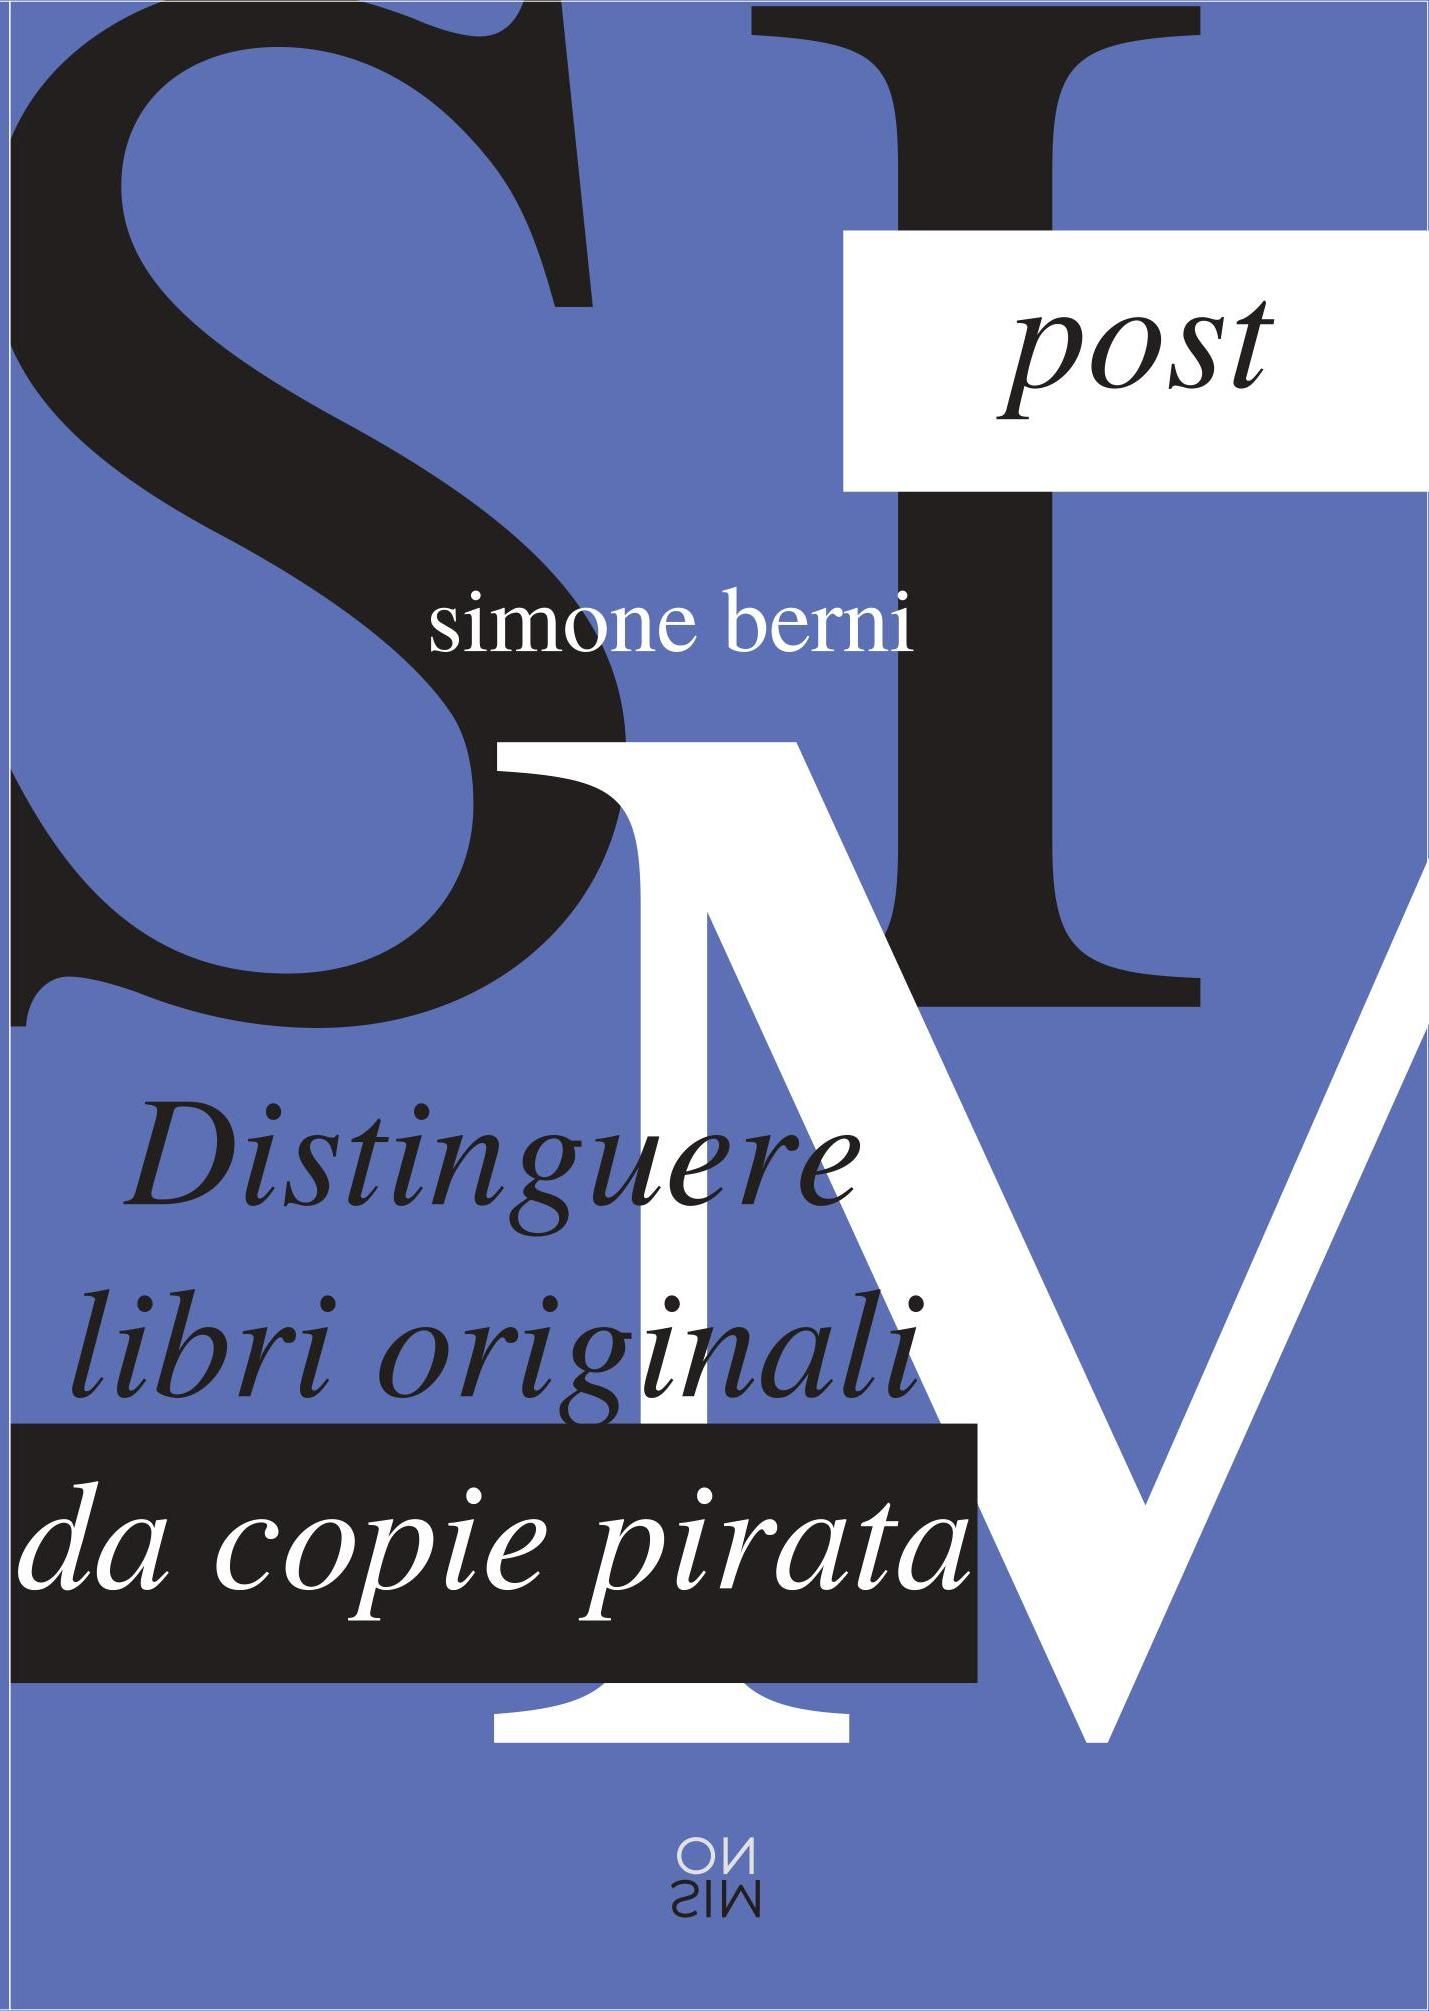 DISTINGUERE LIBRI ORIGINALI DA COPIE PIRATA, di Simone Berni